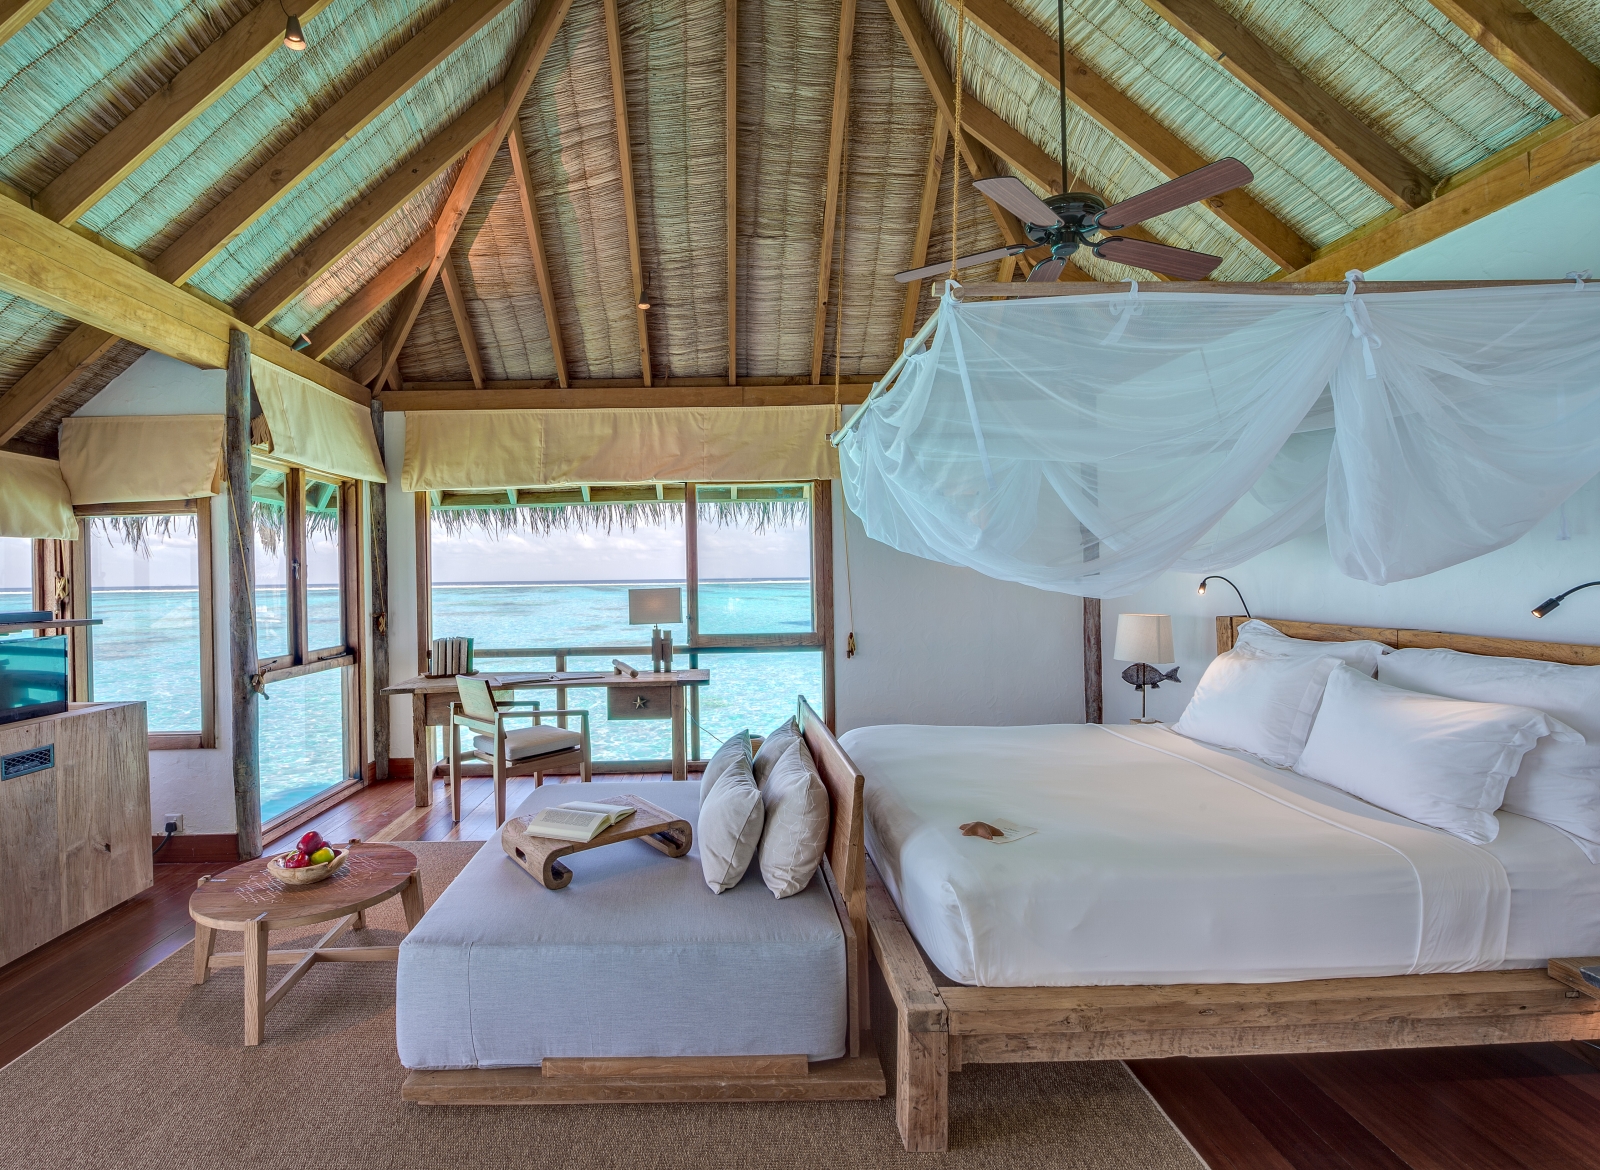 Bedroom of a Villa Suite at luxury resort Gili Lankanfushi in the Maldives